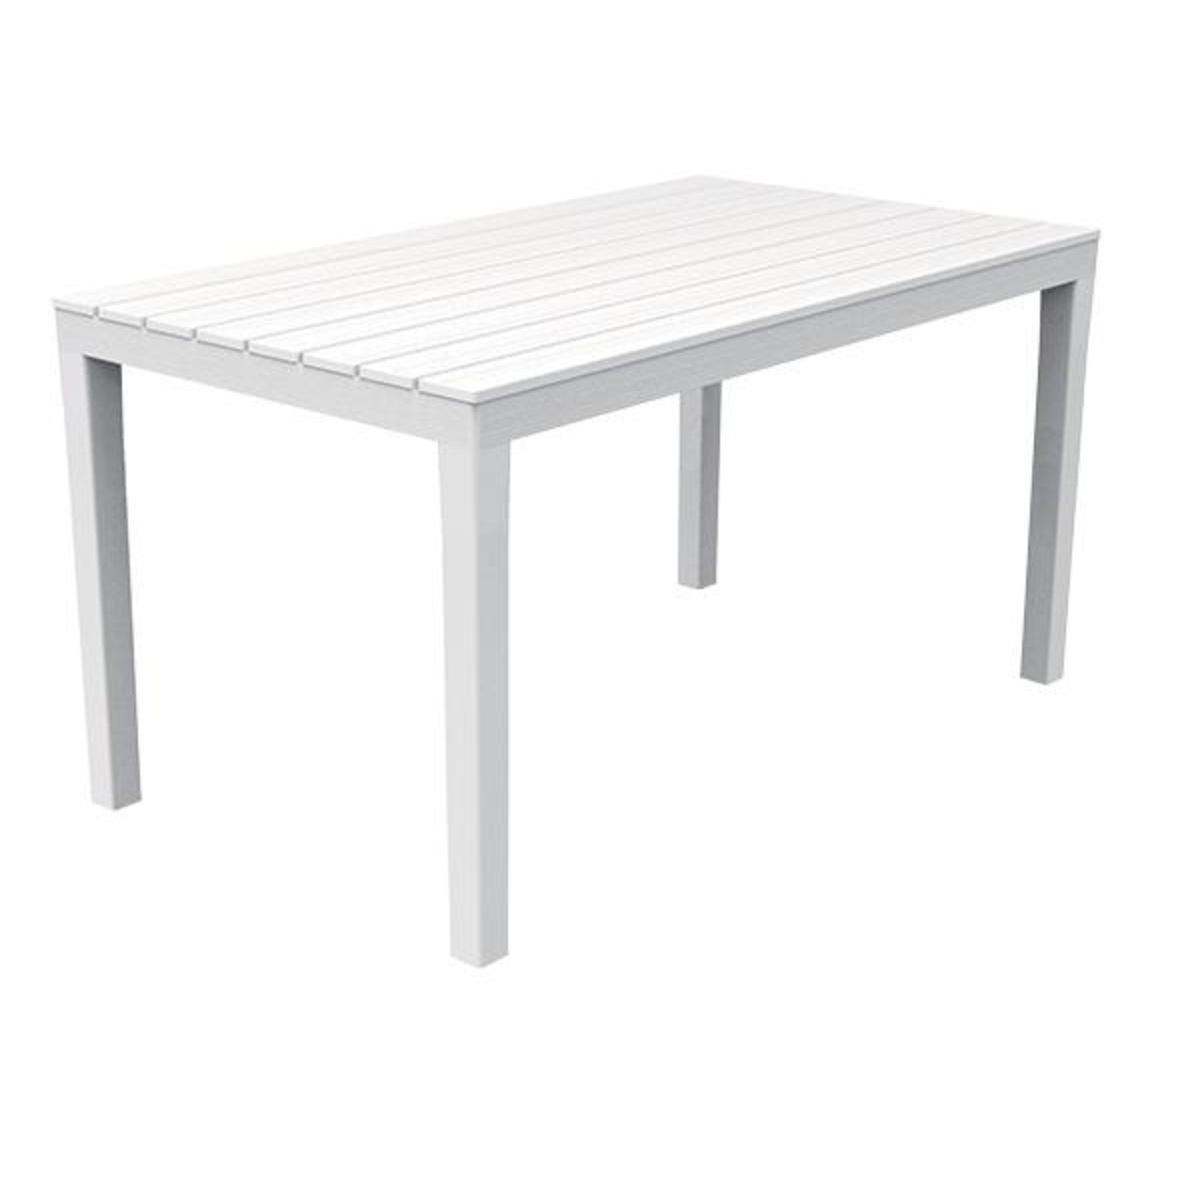 Table imitation bois - 138 x 78 x H 72 cm - Blanc